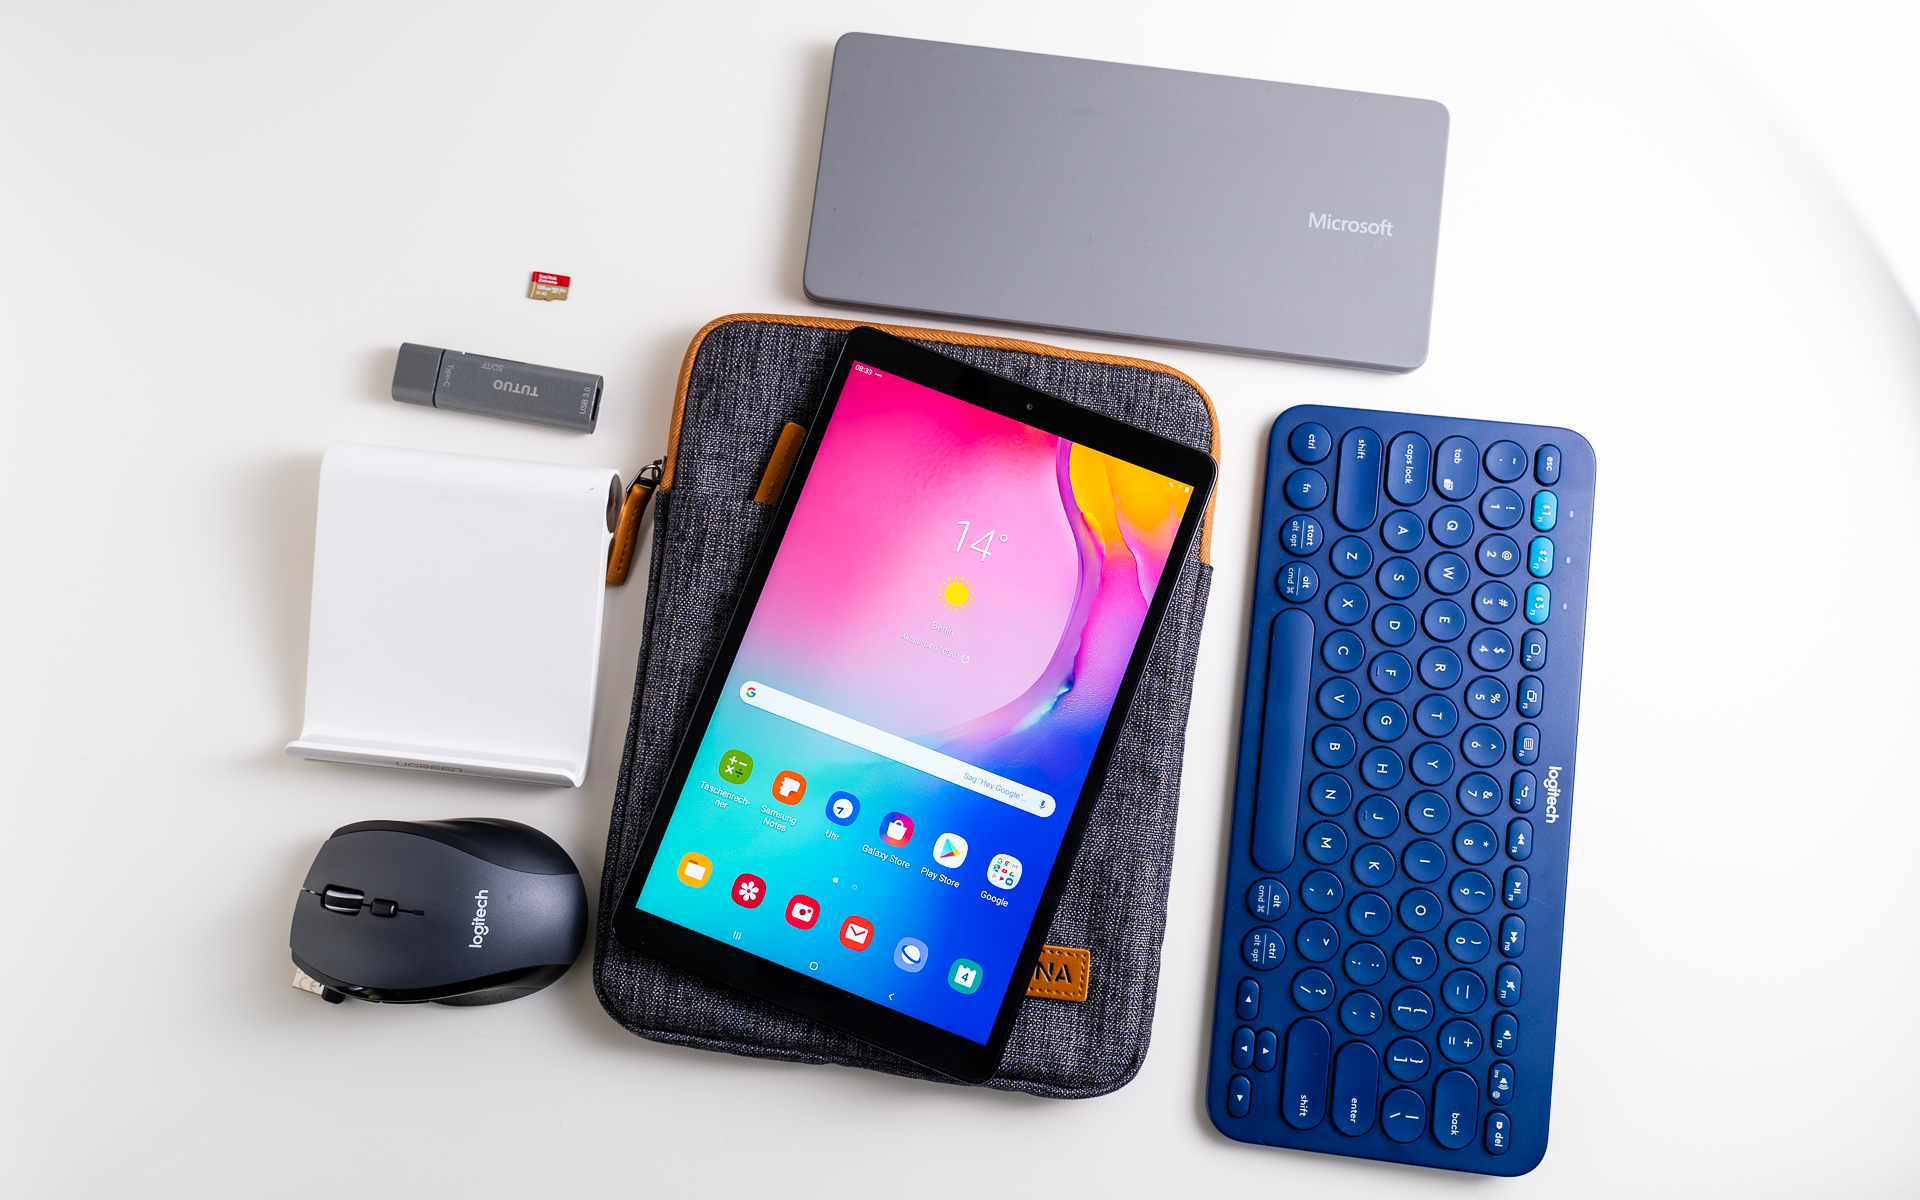 video Veraangenamen Lijm Samsung Galaxy Tab A 10.1 2019 Accessories: Cases, Keyboards & More